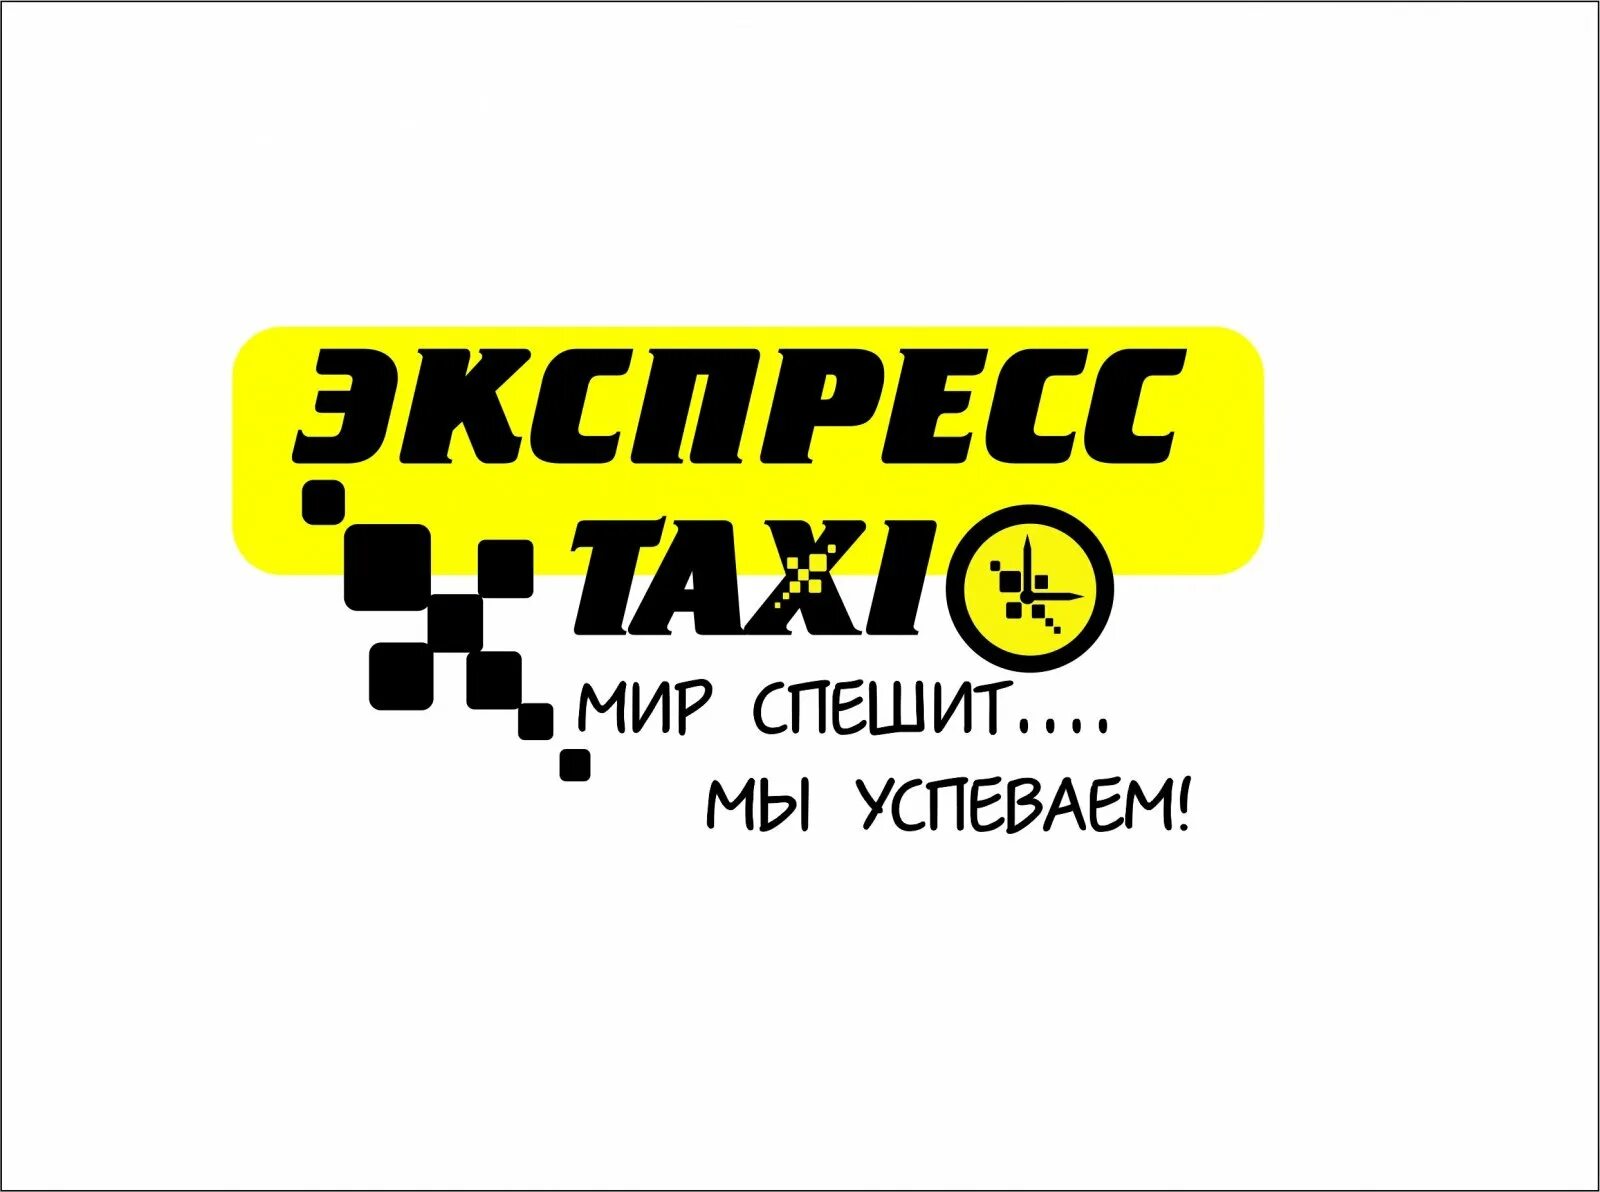 Такси экспресс. Такси надпись. Логотип такси. Аватарка такси. Такси излучинск